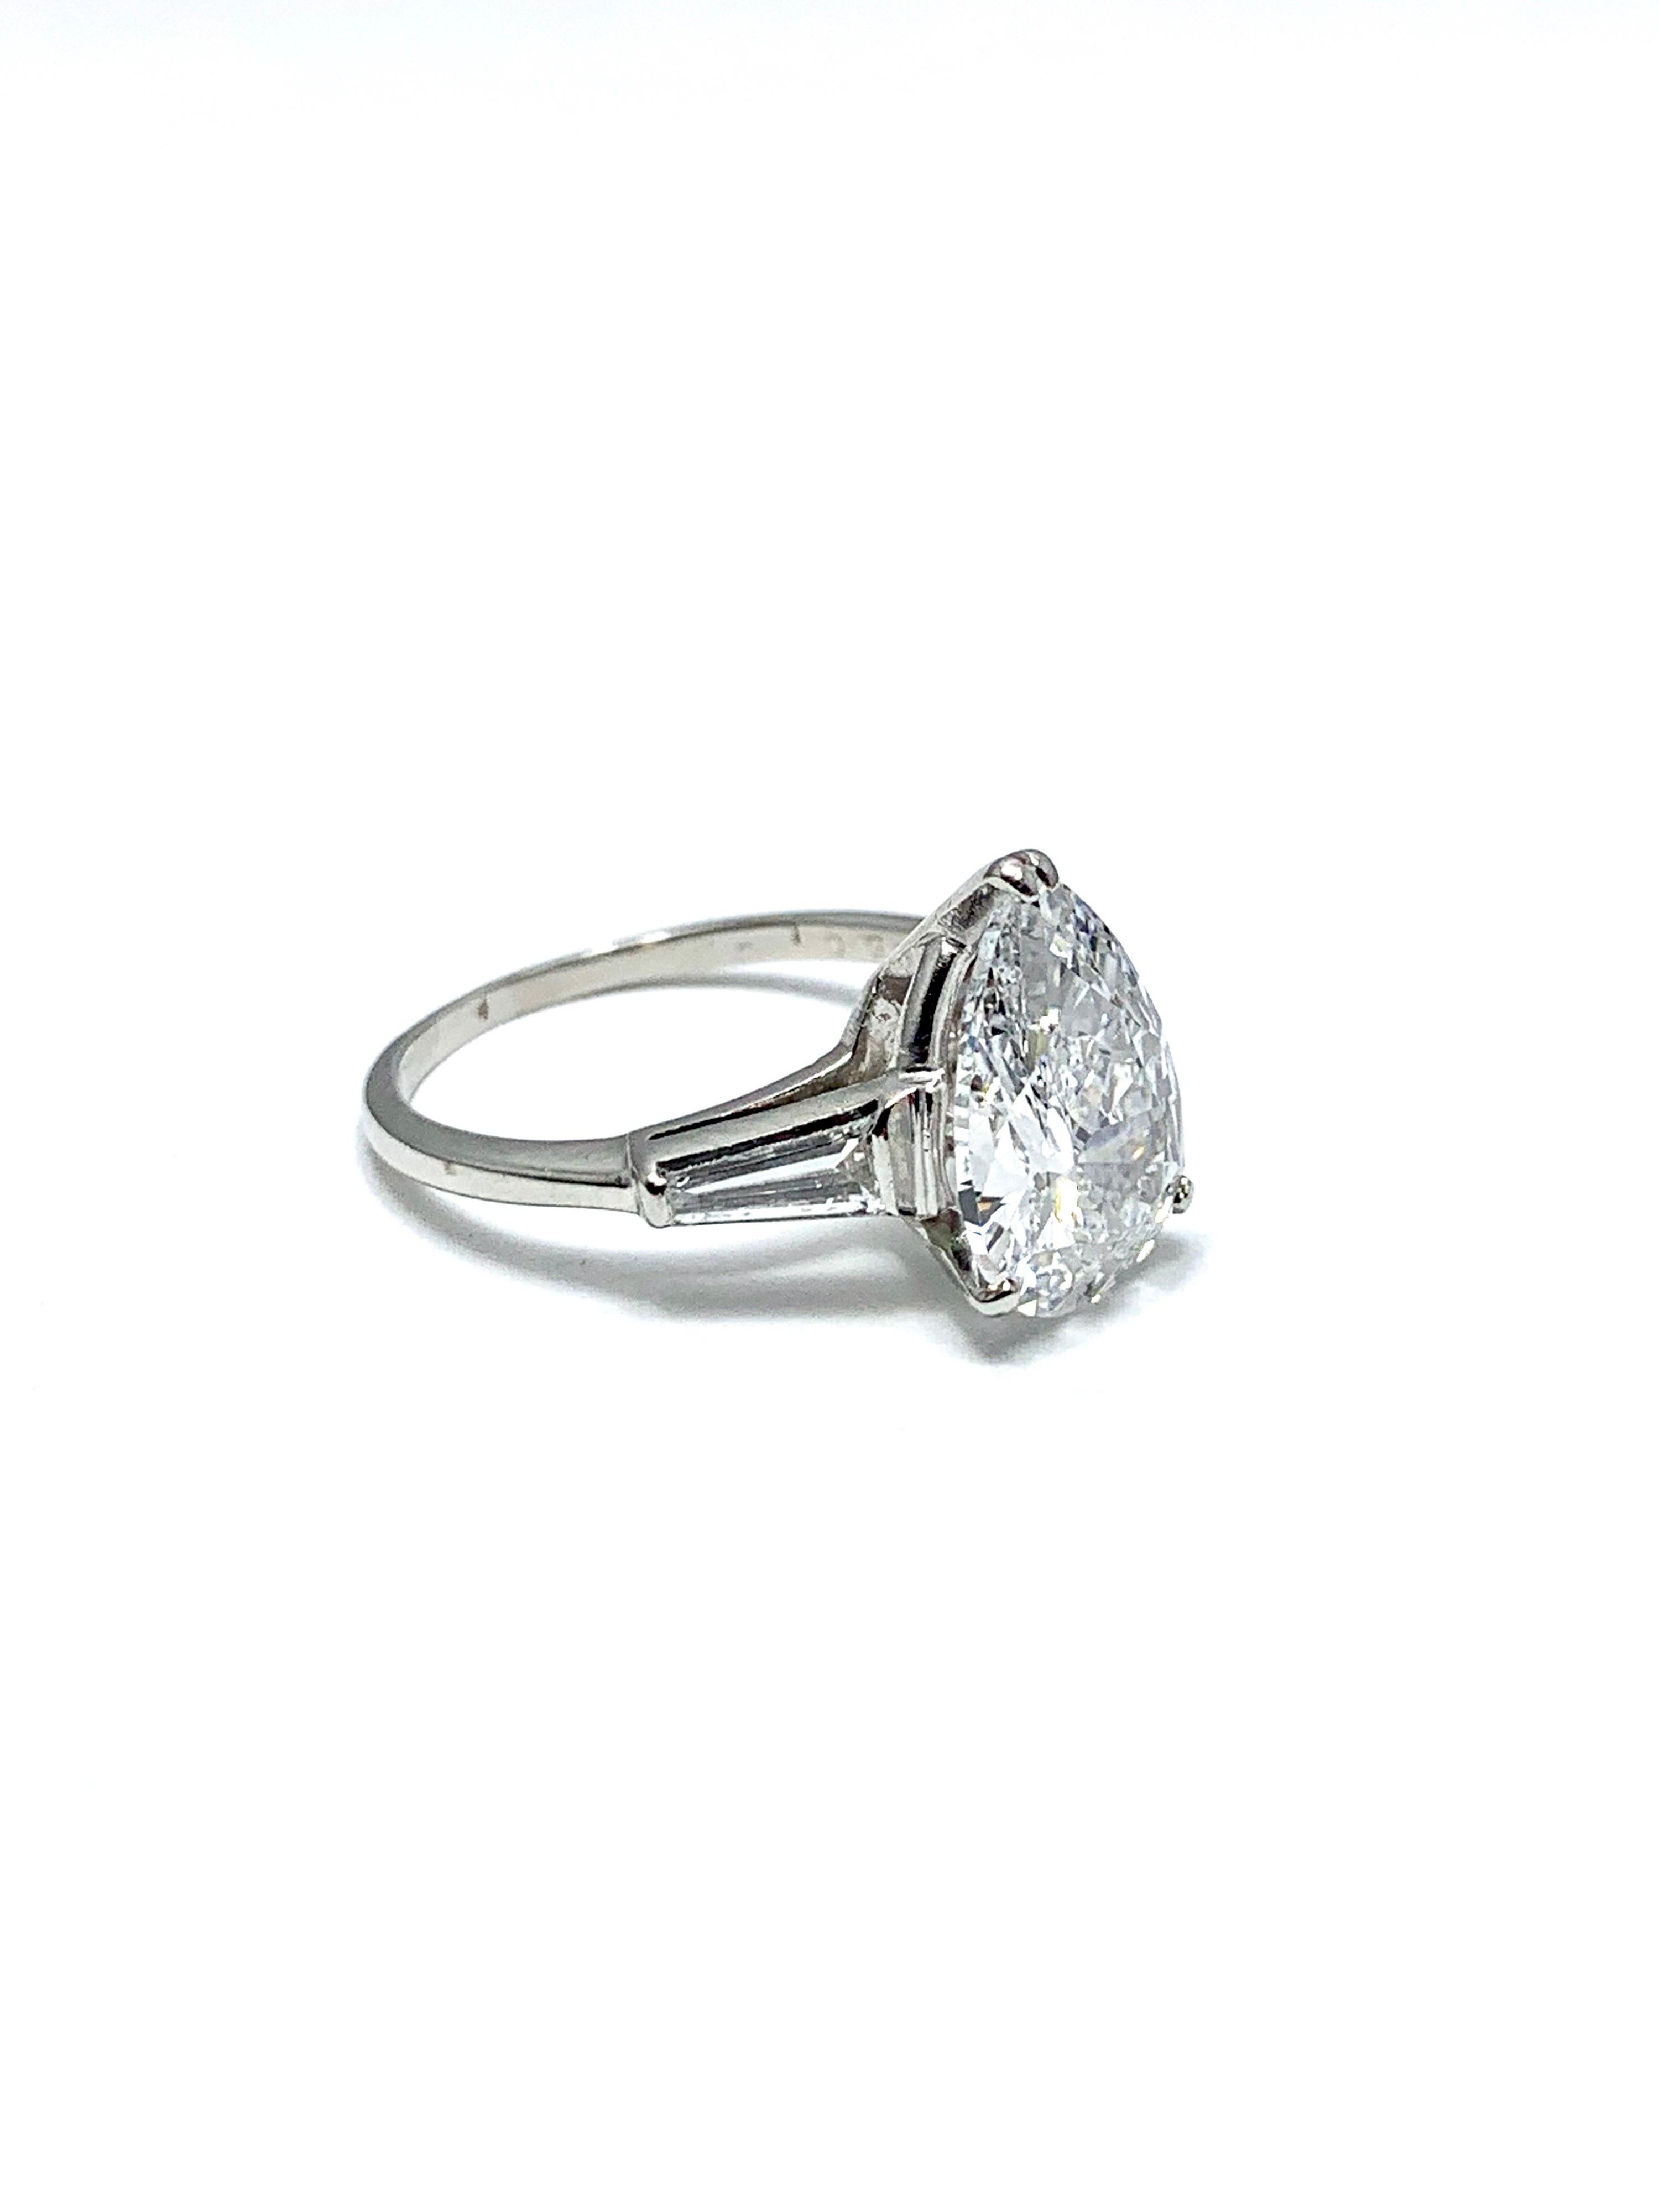 3.14 carat diamond ring